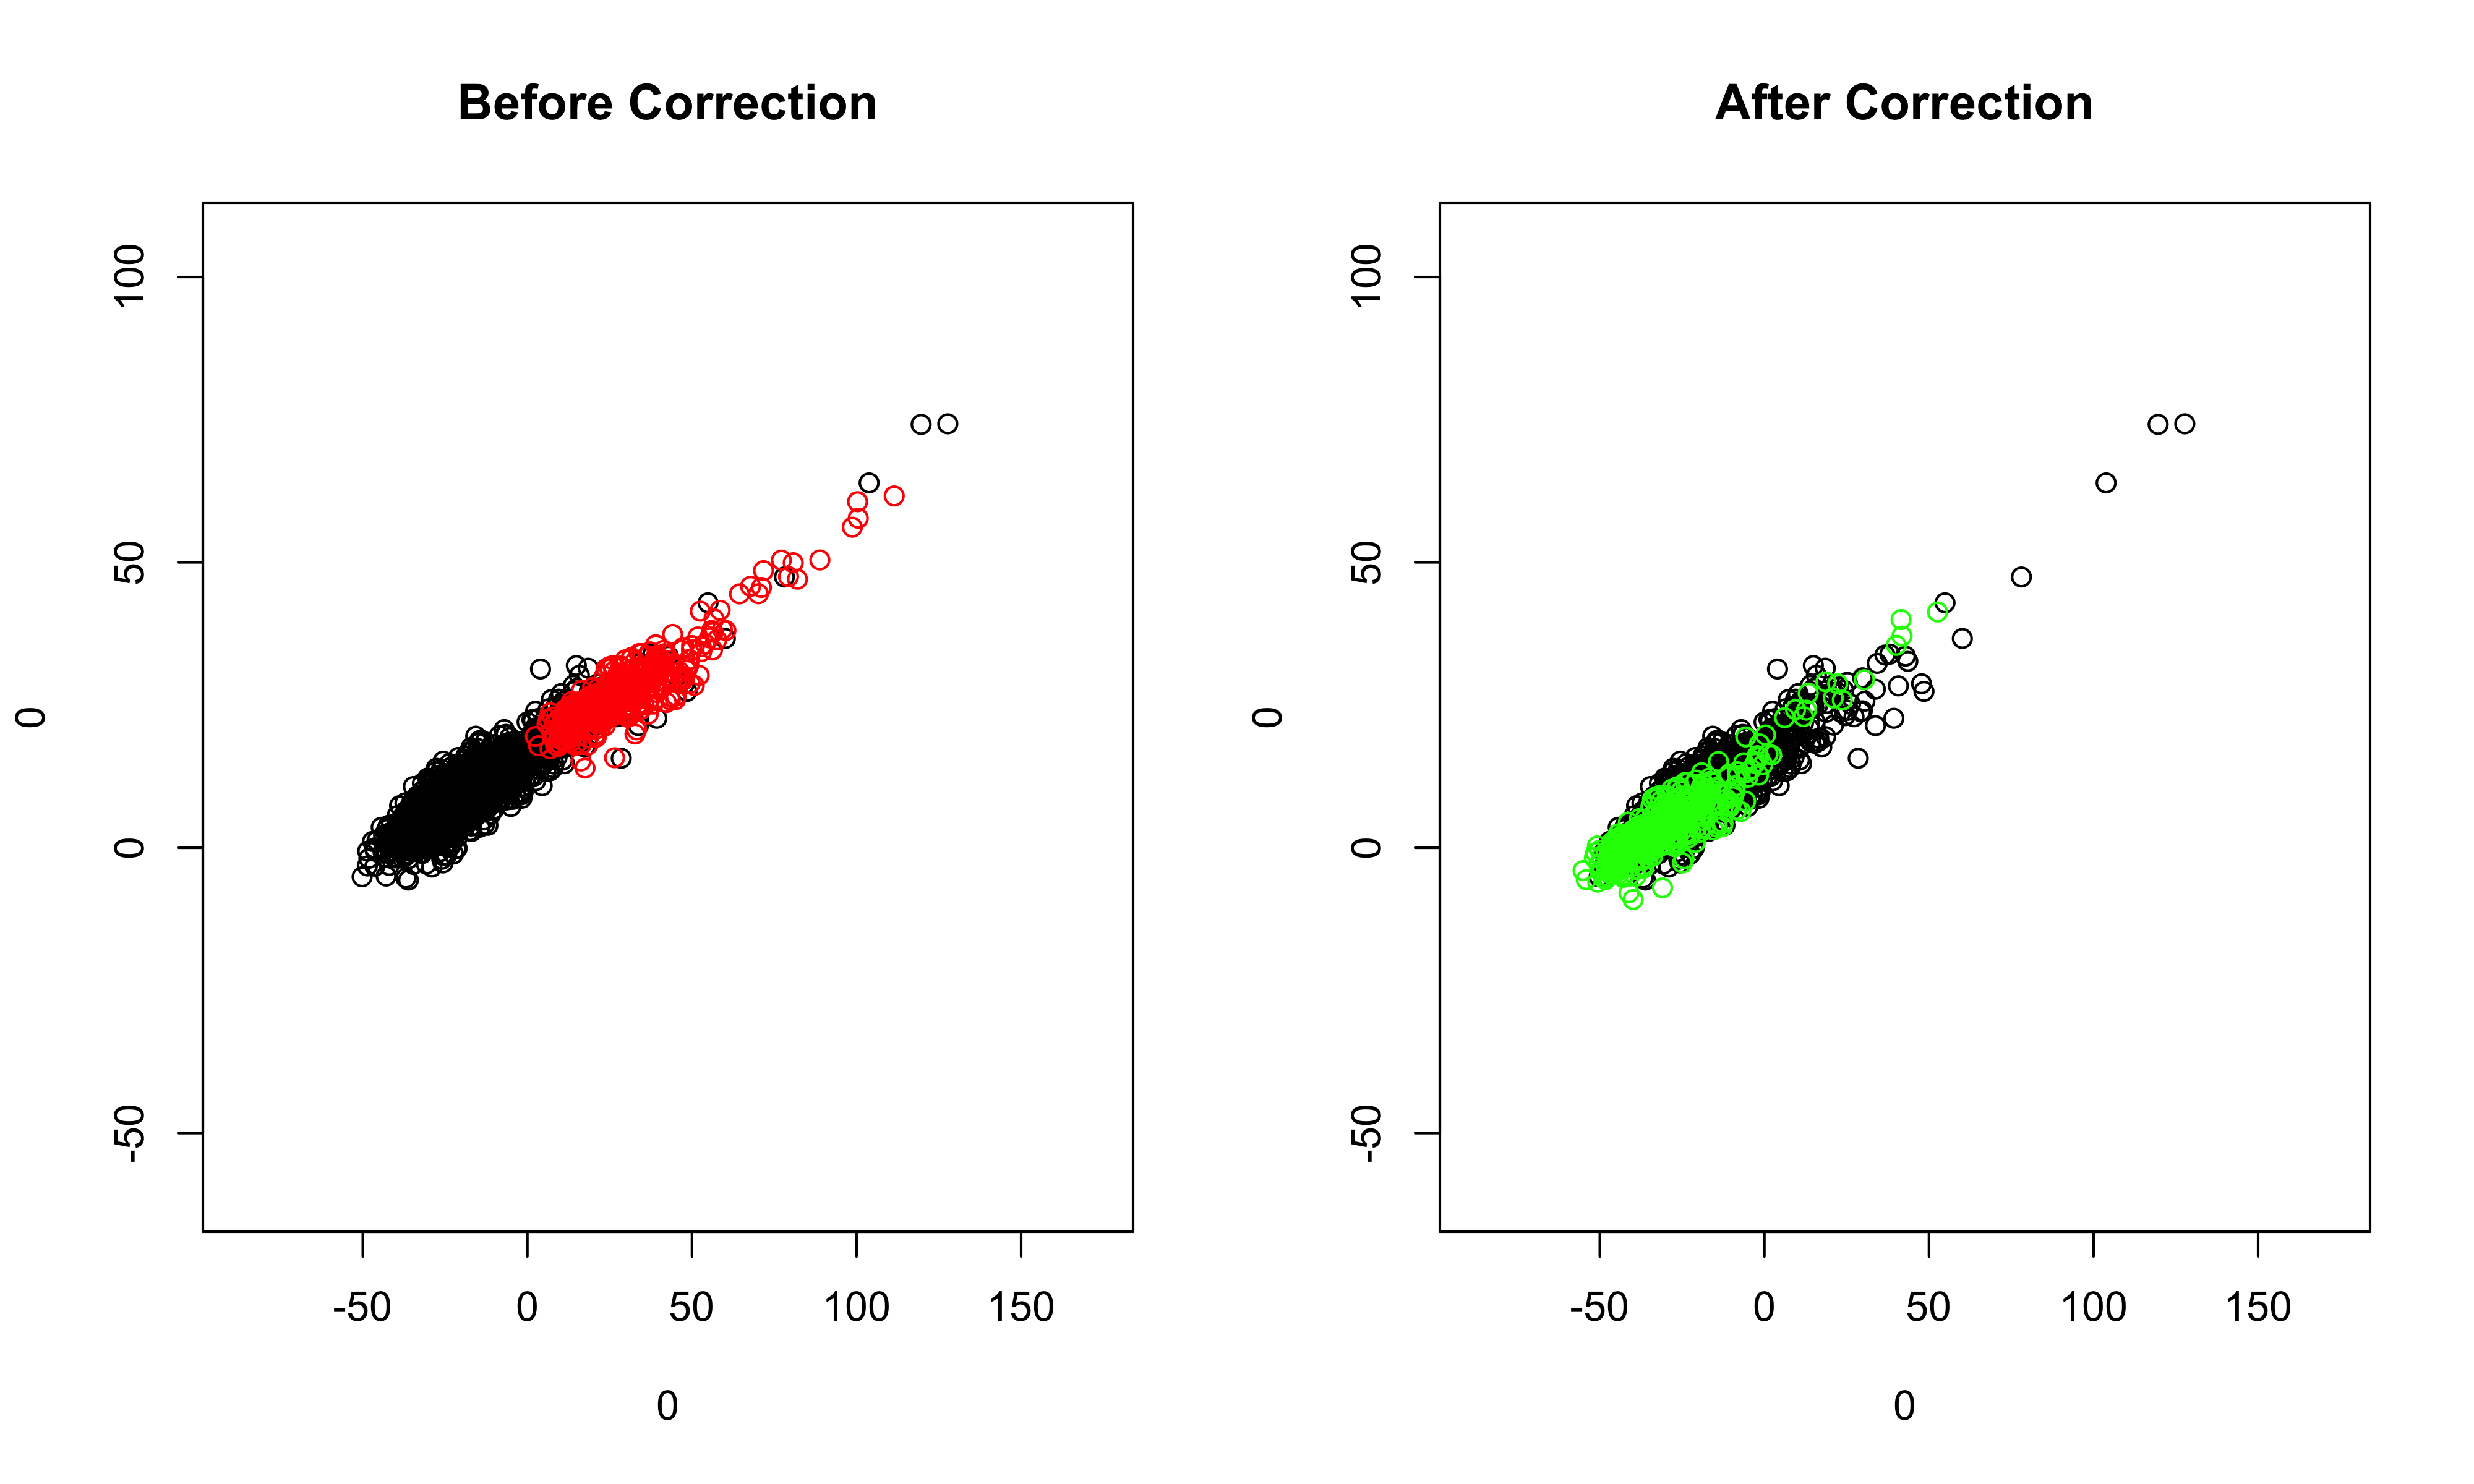 plot of corrected data